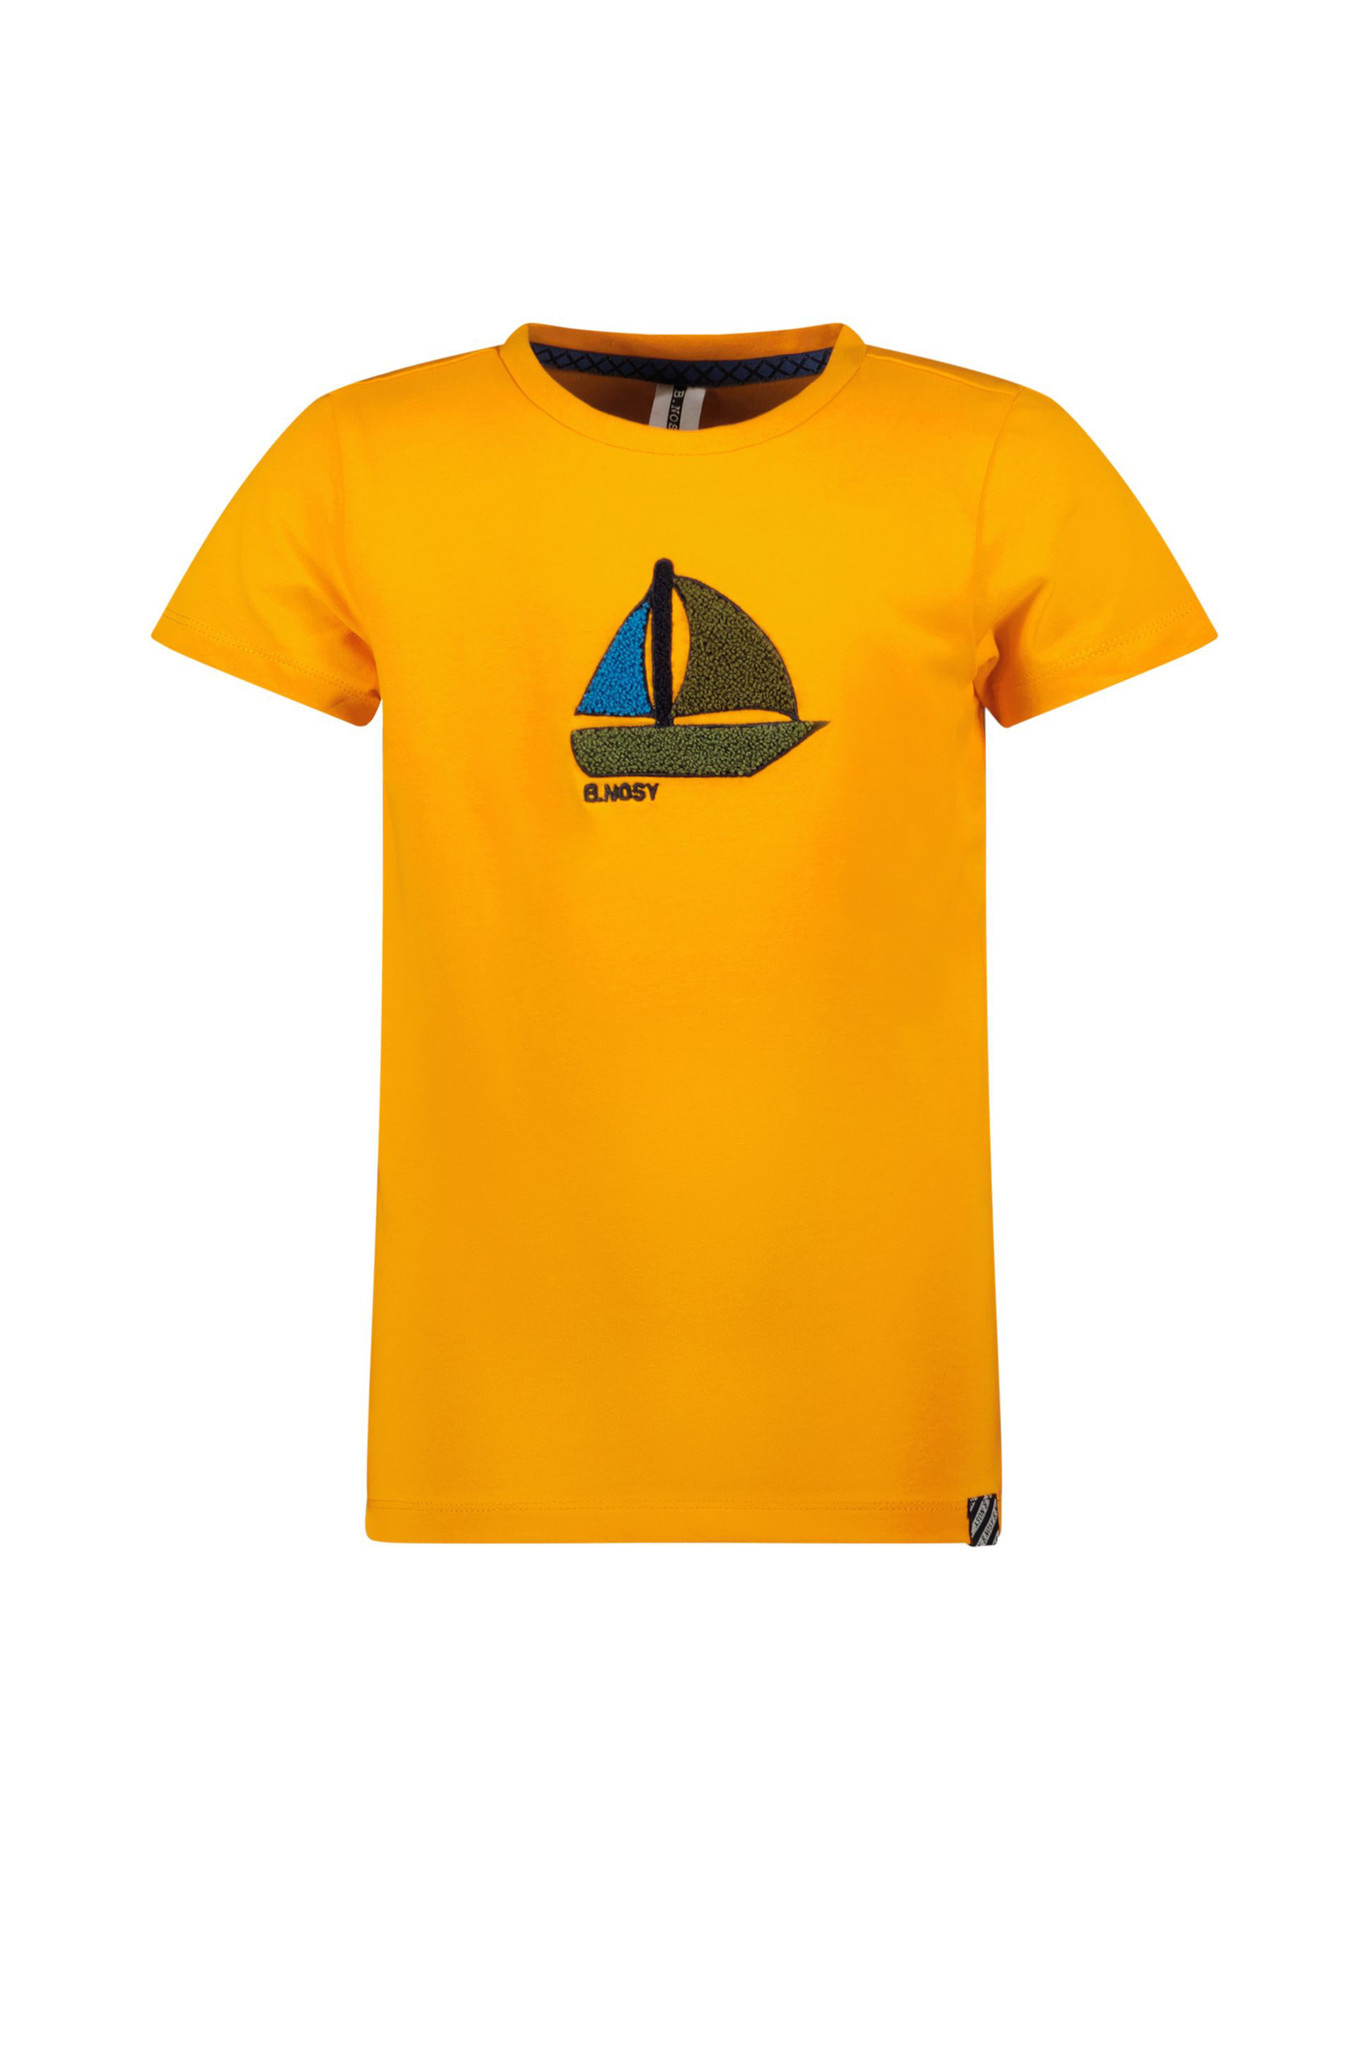 B.Nosy jongens t-shirt Sailing Ship Calm Orange